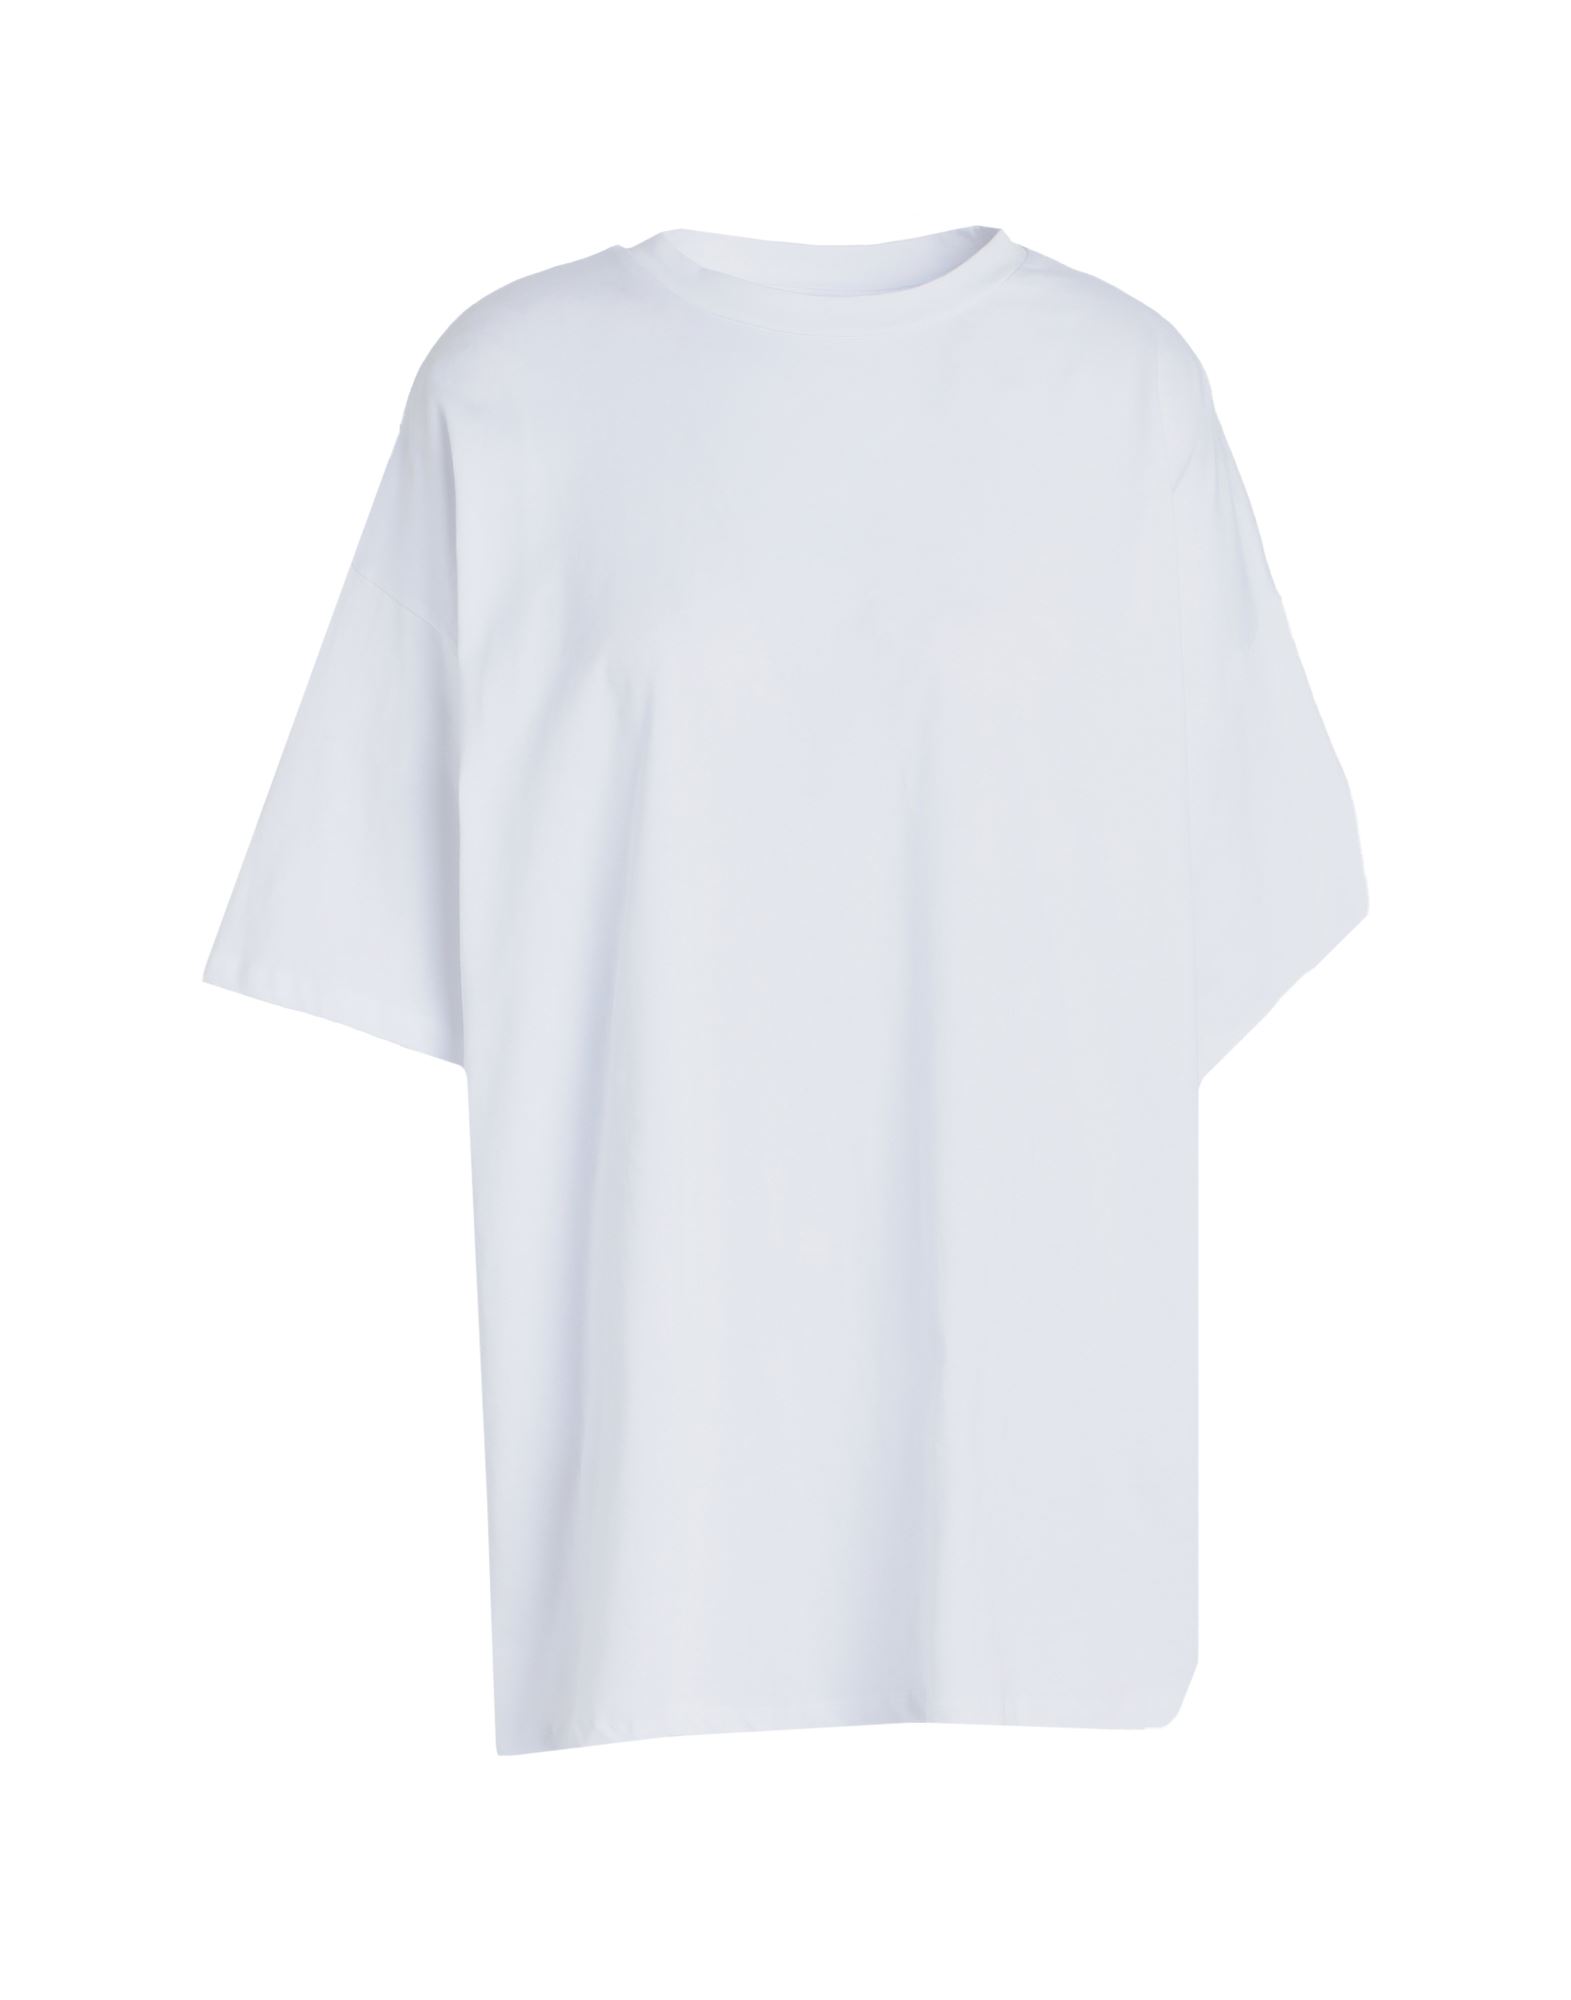 Somethingnew0803 T-shirts In White